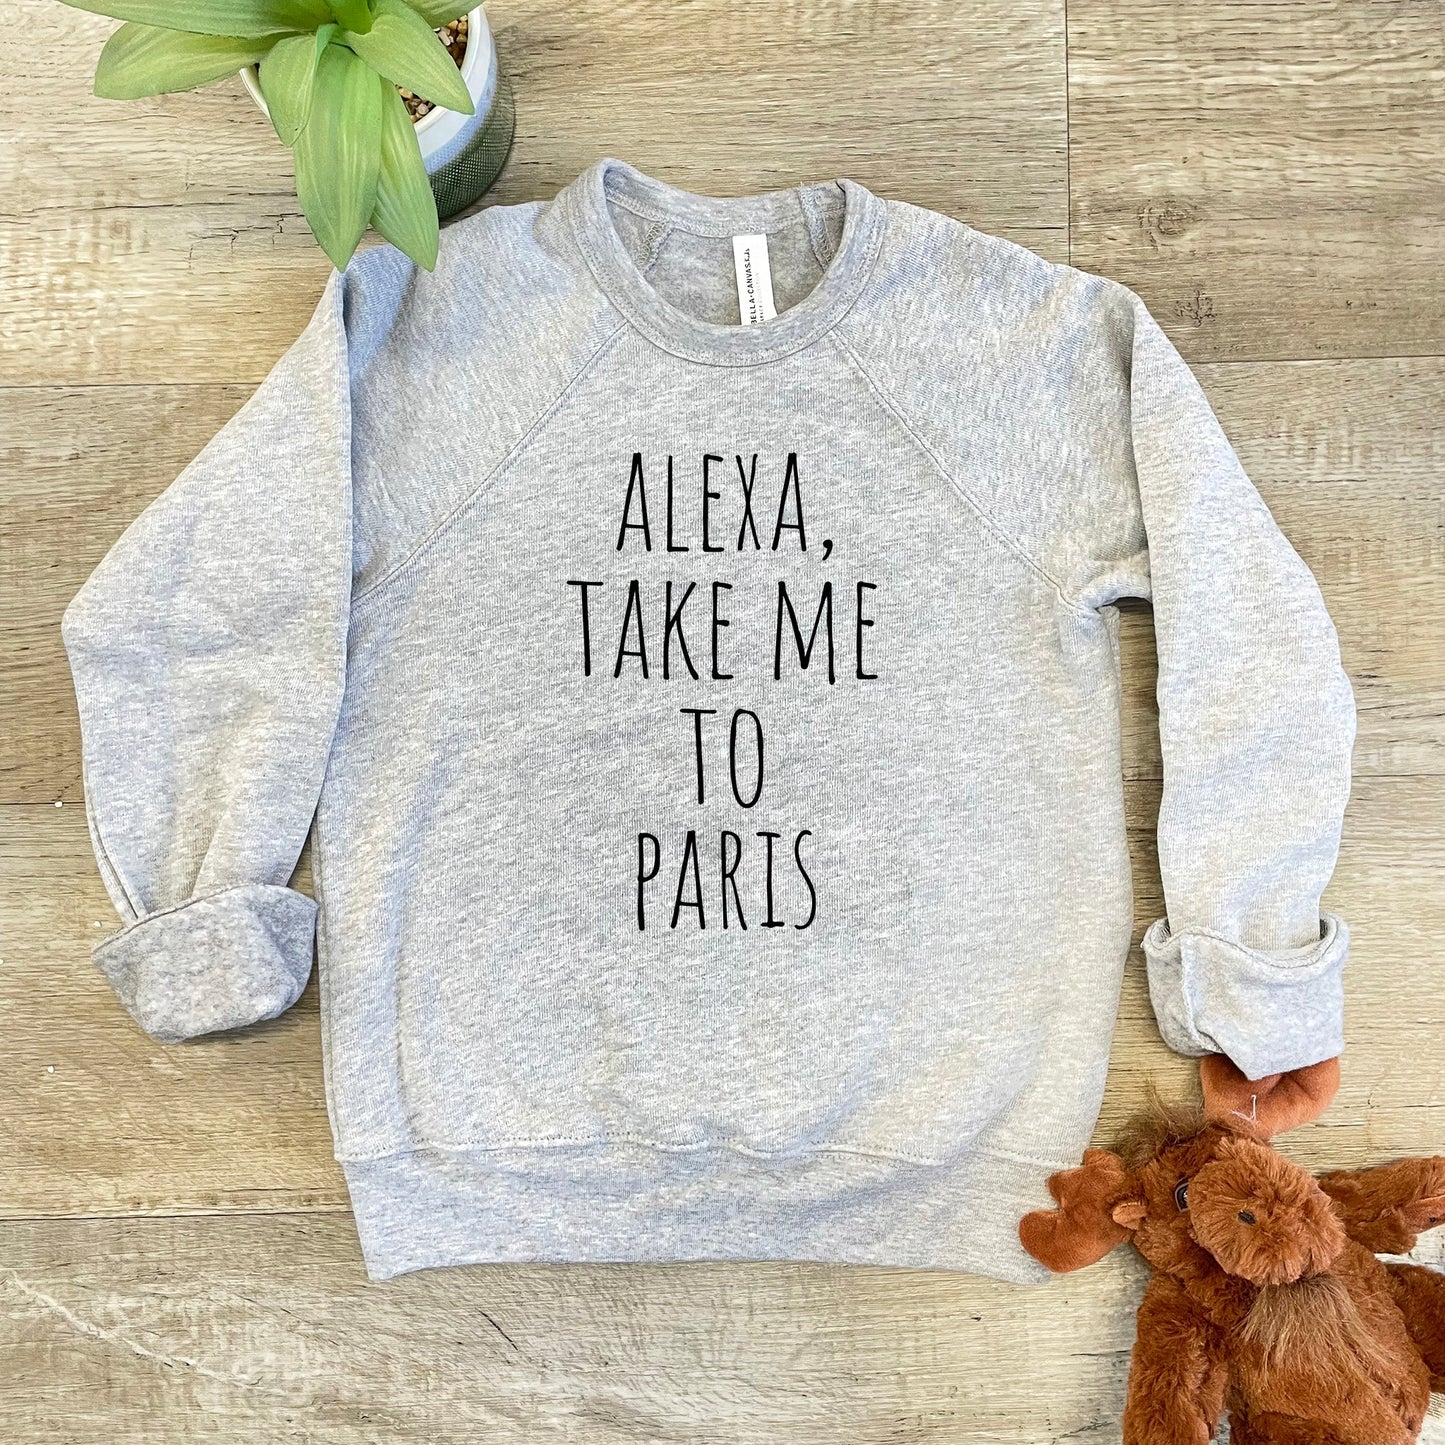 Alexa, Take Me To Paris - Kid's Sweatshirt - Athletic Heather or Mauve